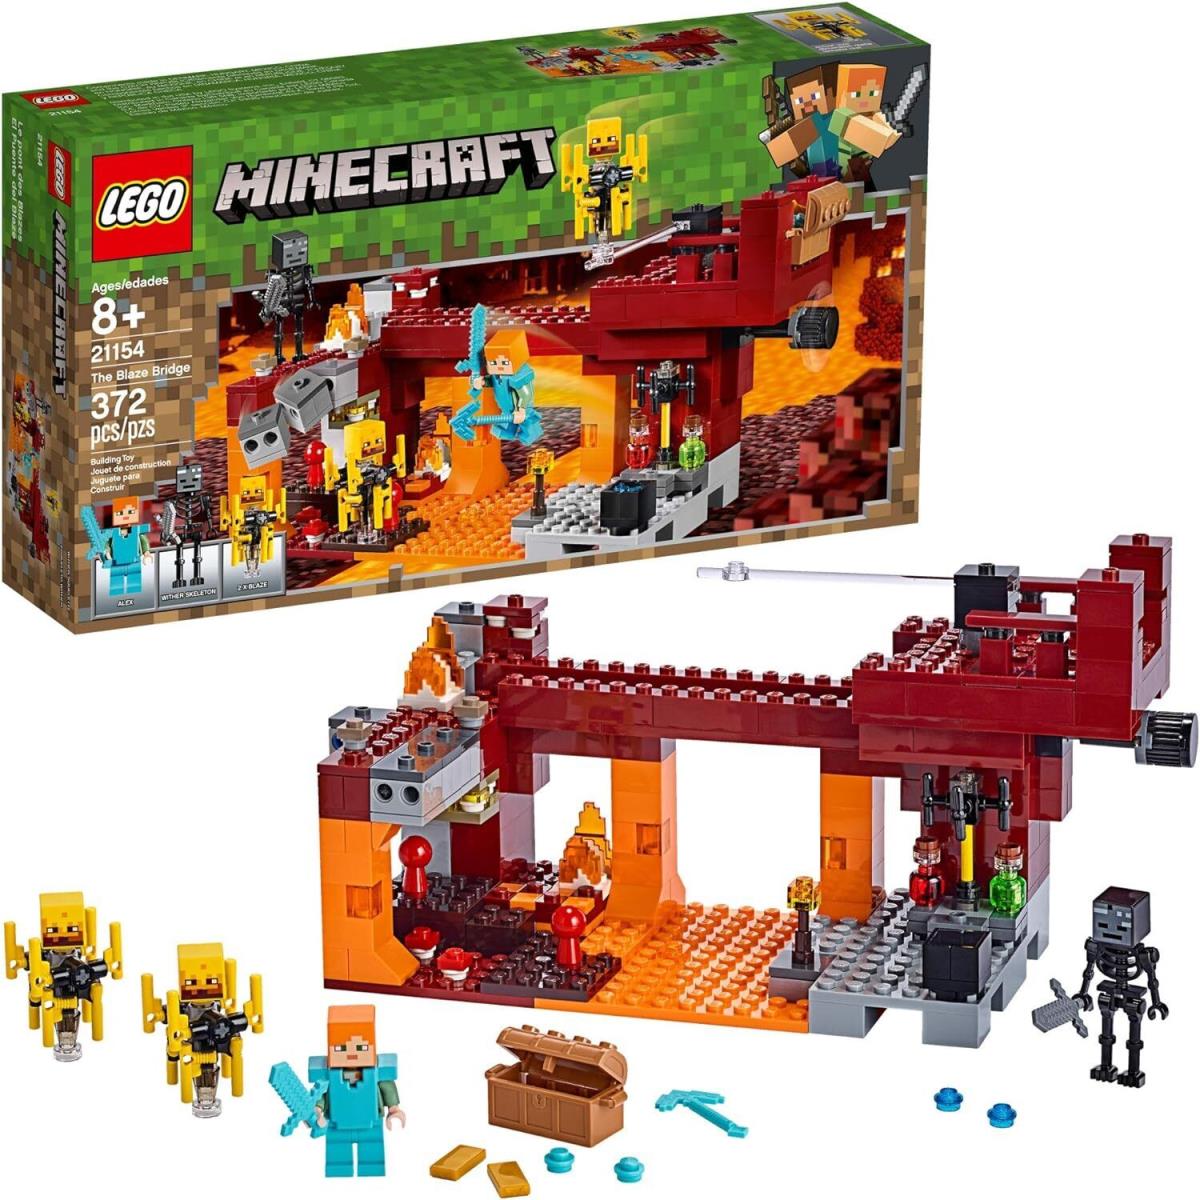 21154 Lego Minecraft The Blaze Bridge